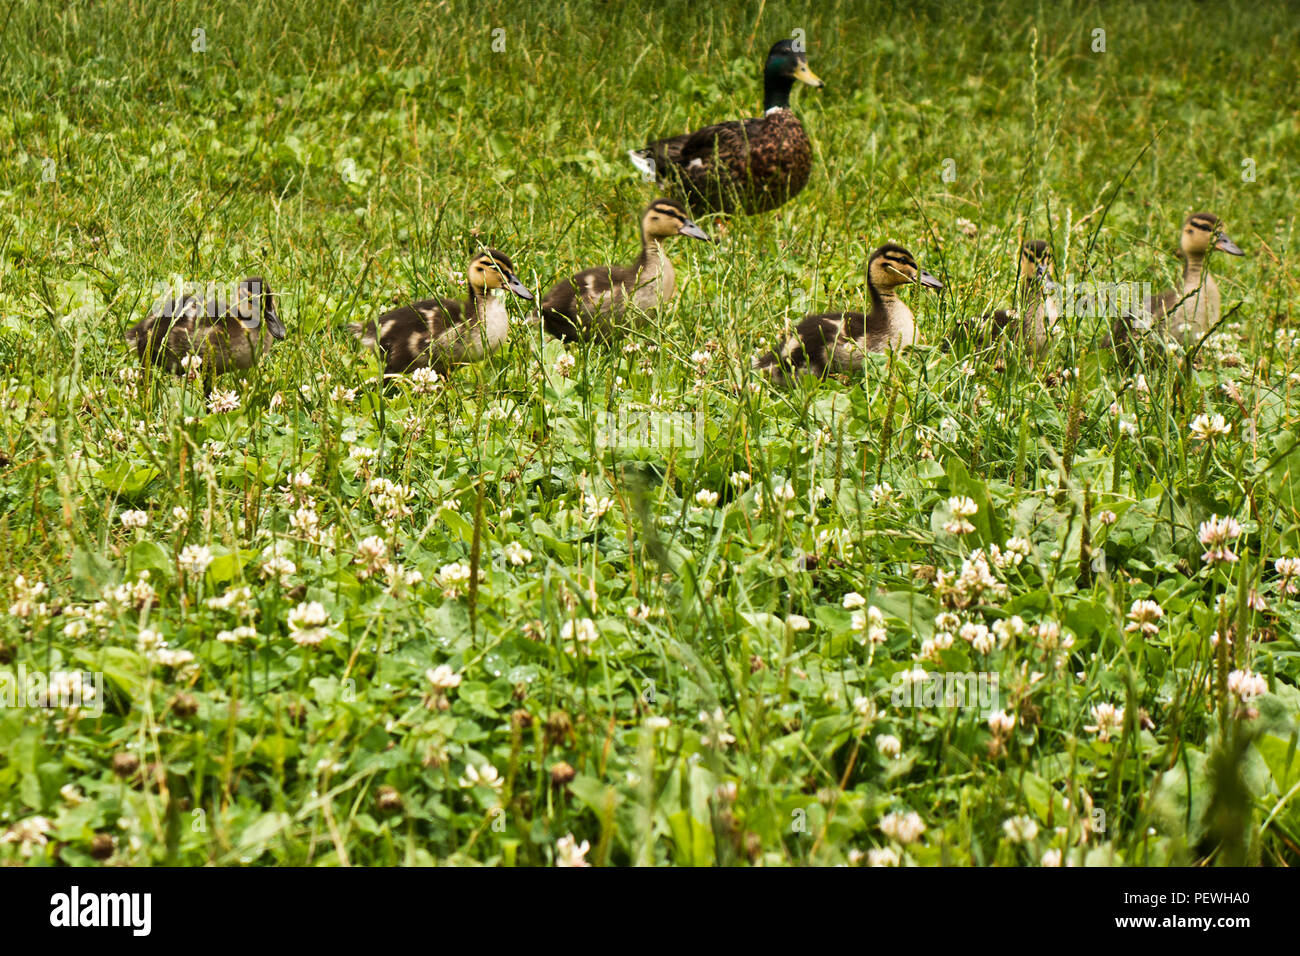 Mallard duck and her offspring walking in grass Stock Photo